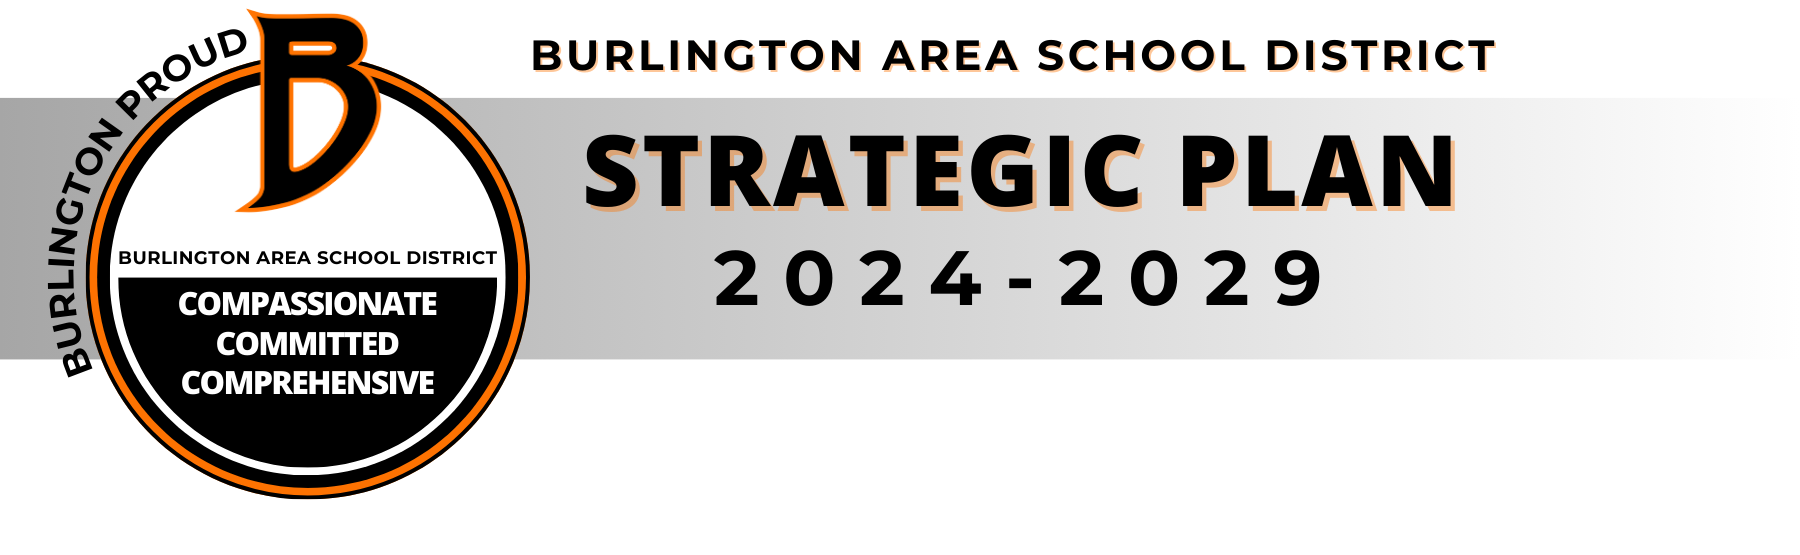 Strategic Plan 2024 - 2029